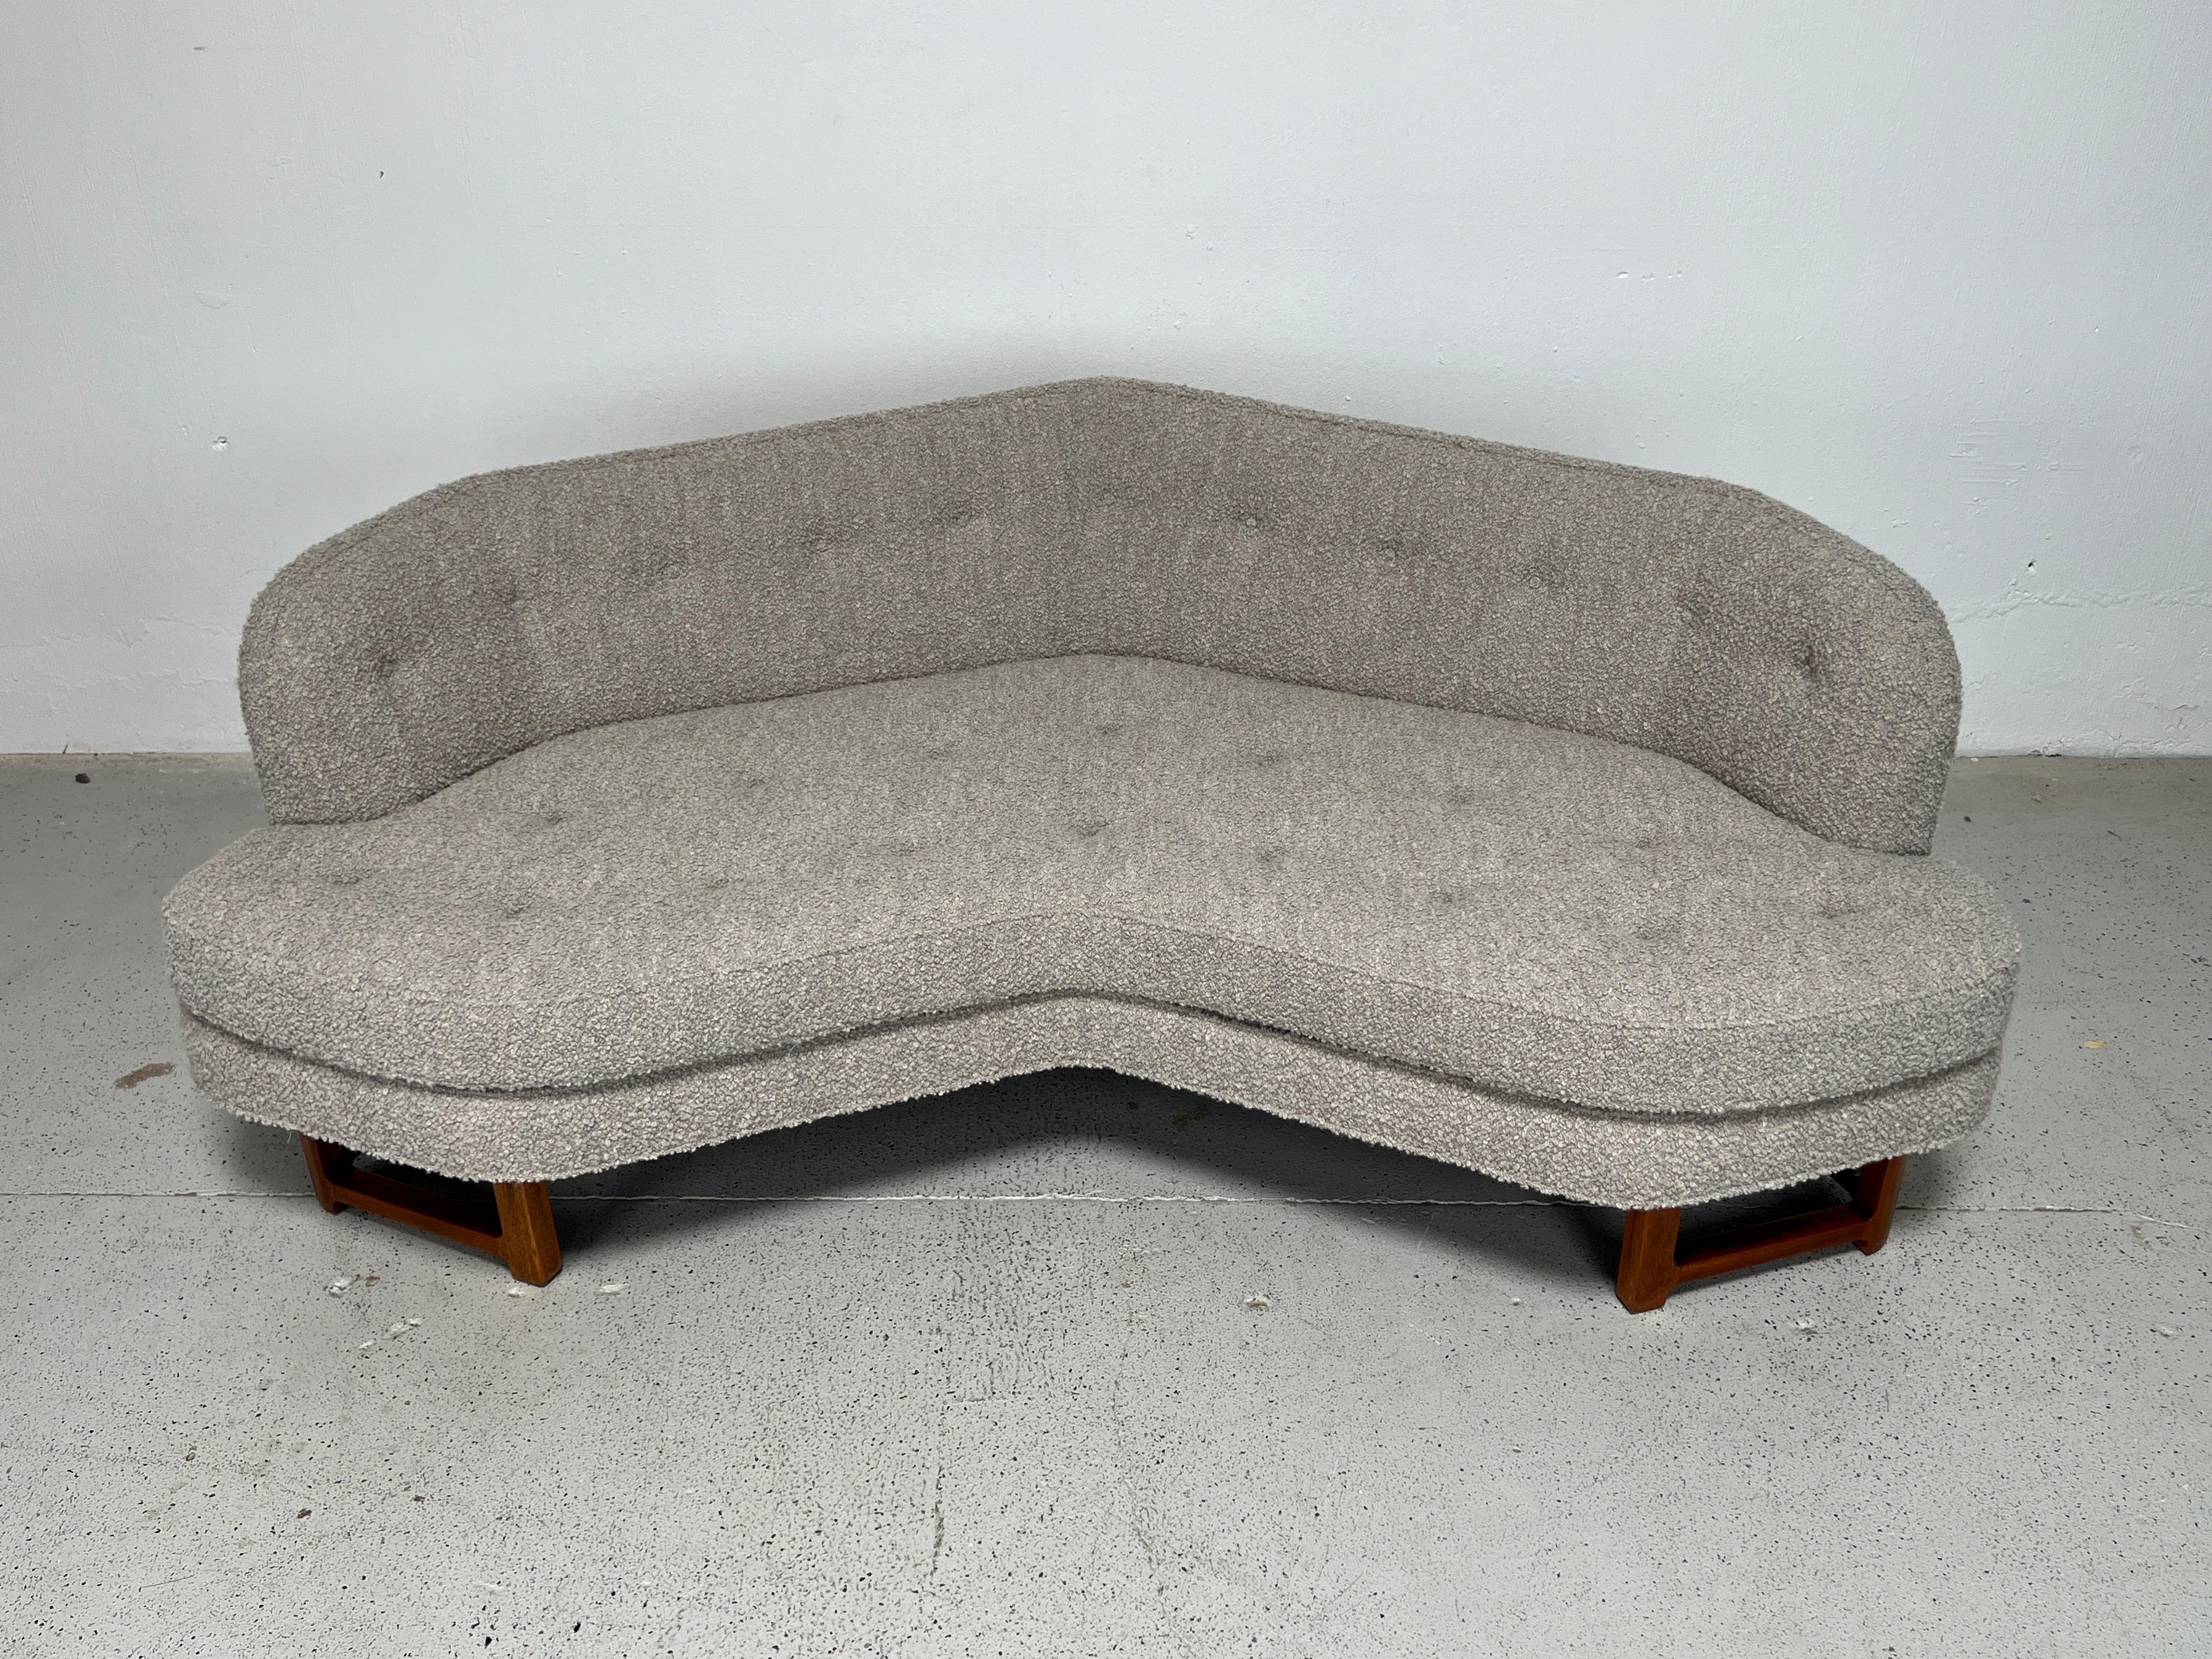  Angled Sofa by Edward Wormley for Dunbar 3